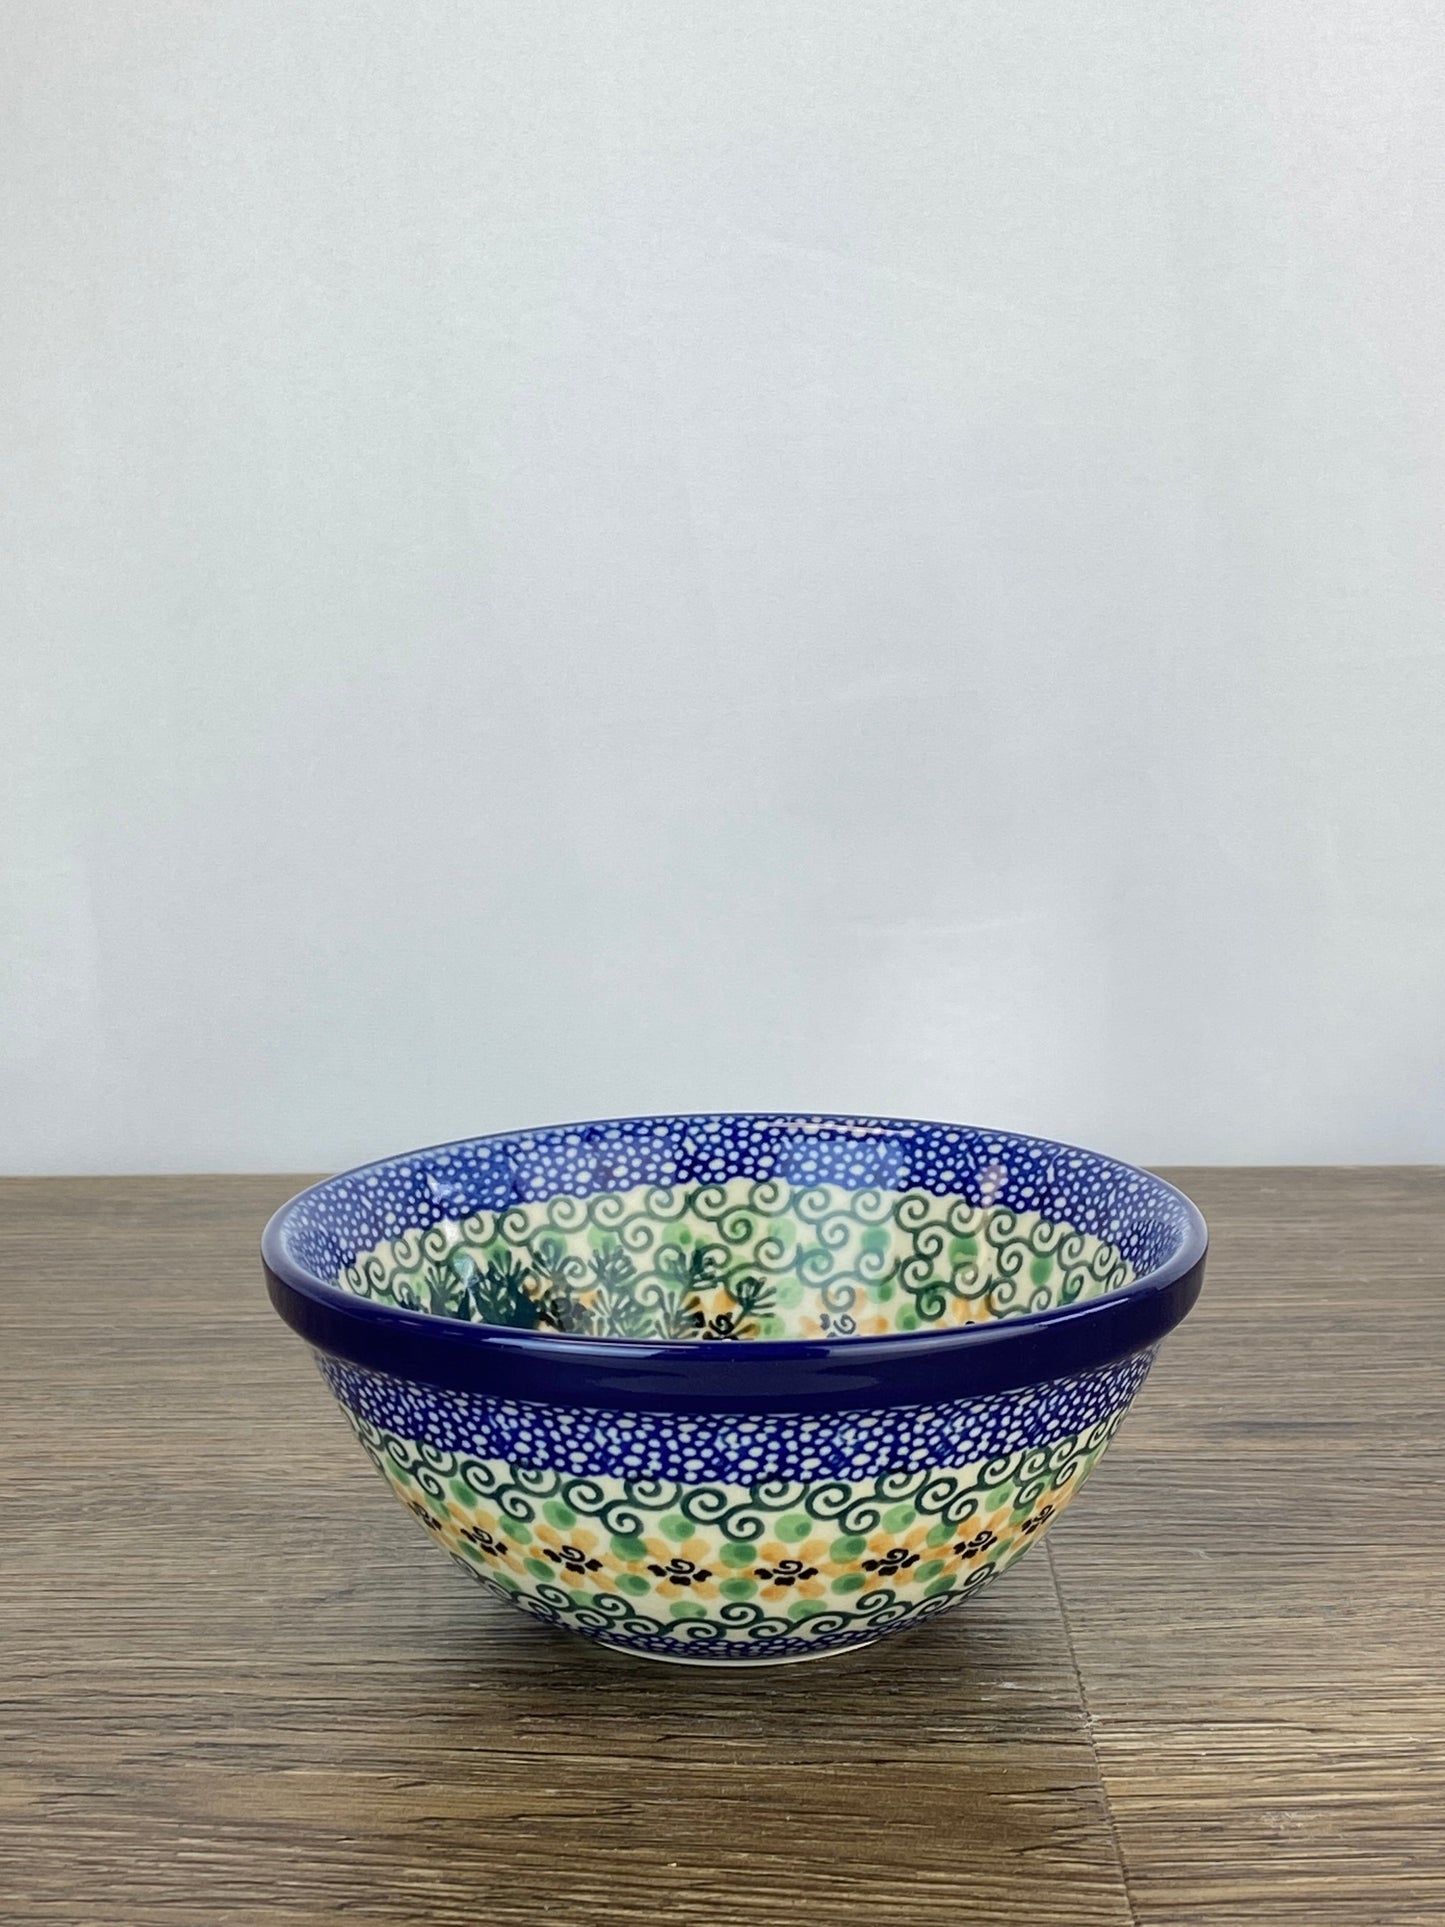 SALE Small Unikat Cereal Bowl - Shape 59 - Pattern U1491